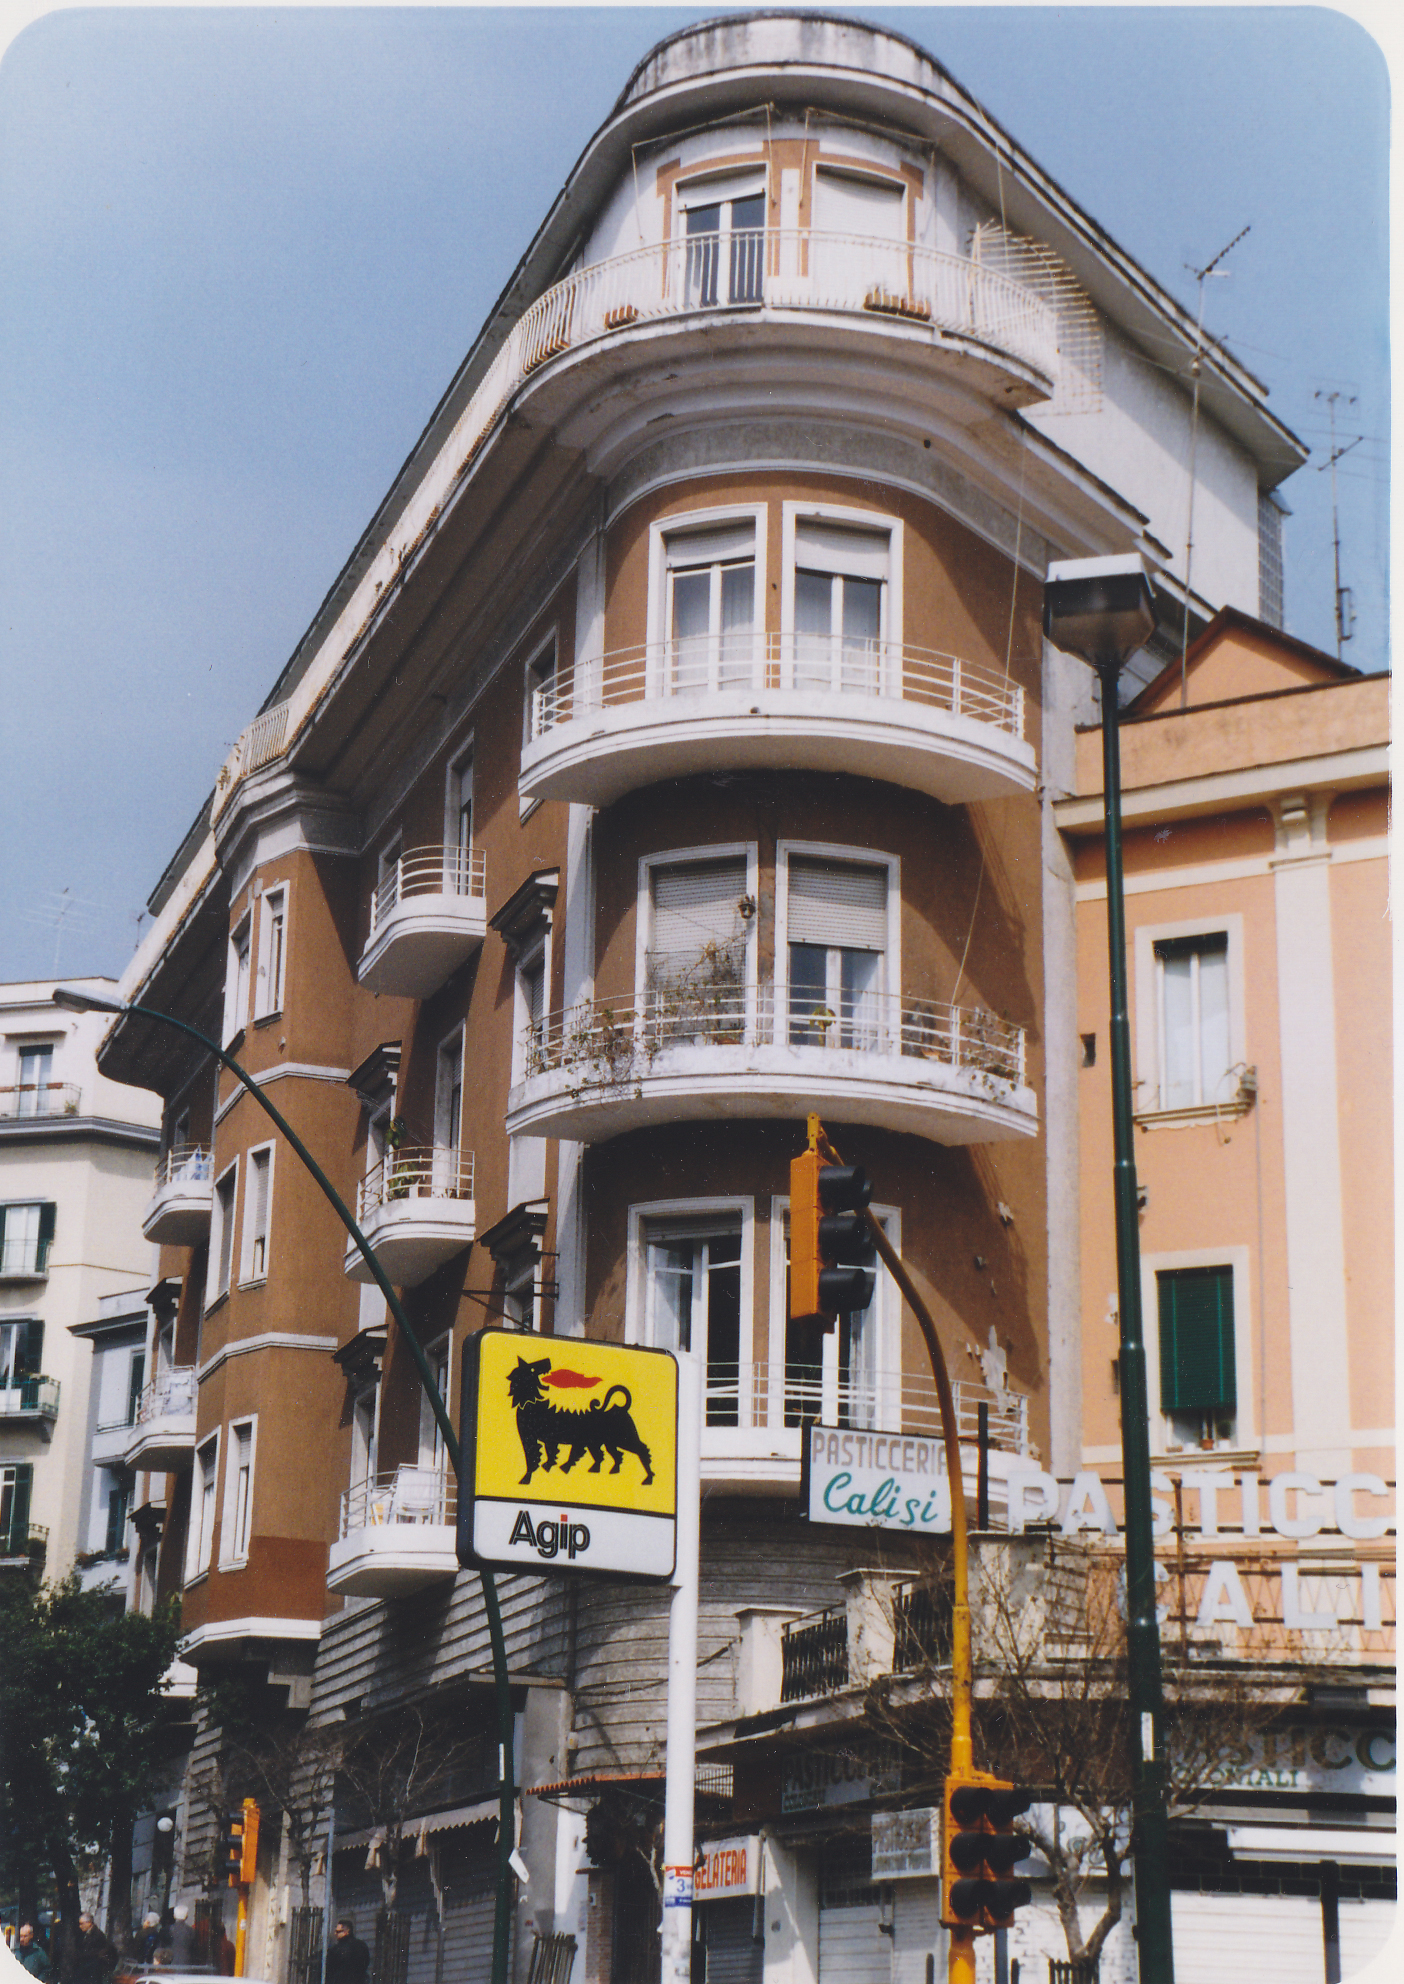 ignota - via Ugo Palermo, 6 (palazzo, residenziale) - Napoli (NA) 